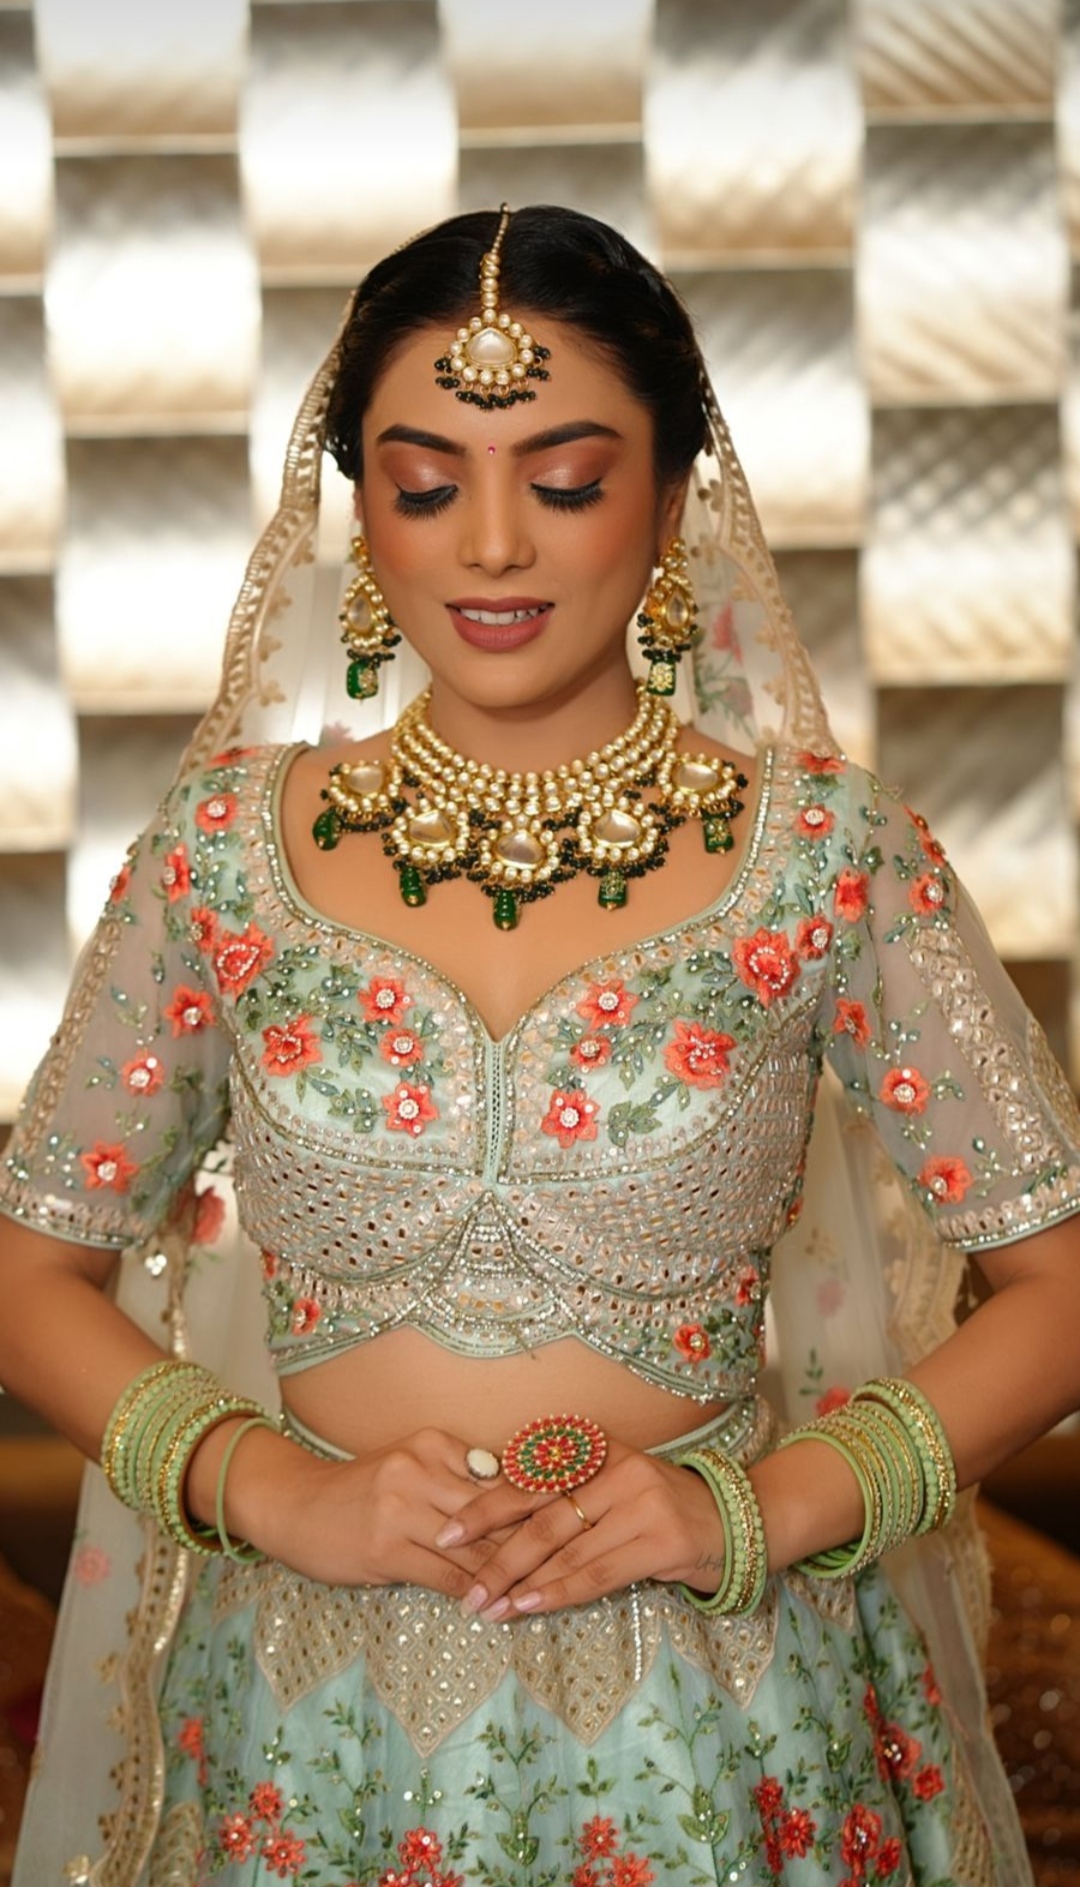 rashmi-mishra-makeup-artist-mumbai